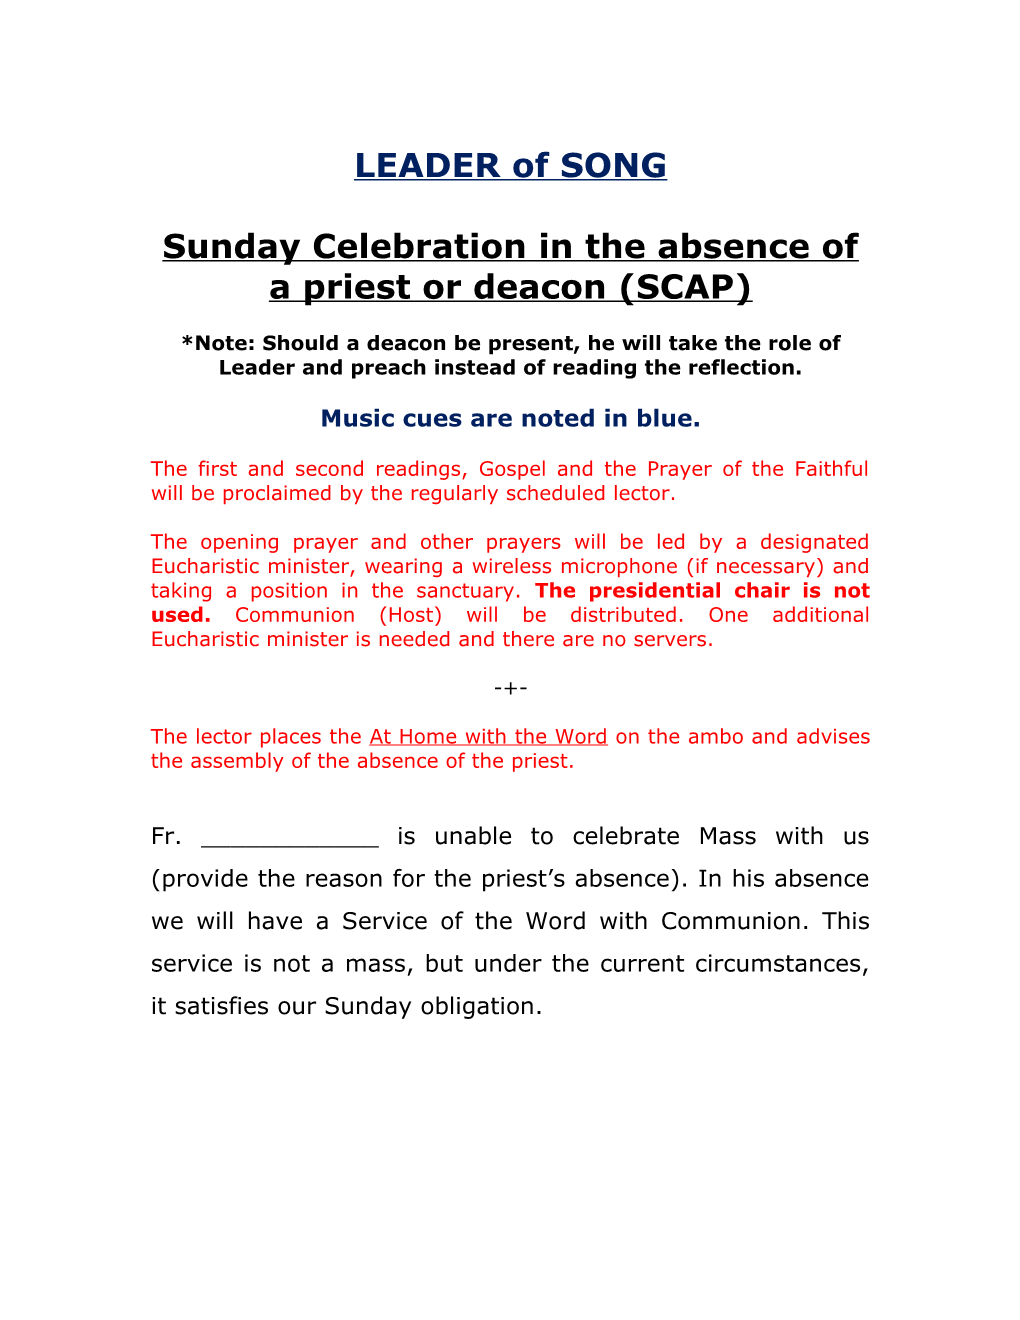 Sunday Word and Communion Service